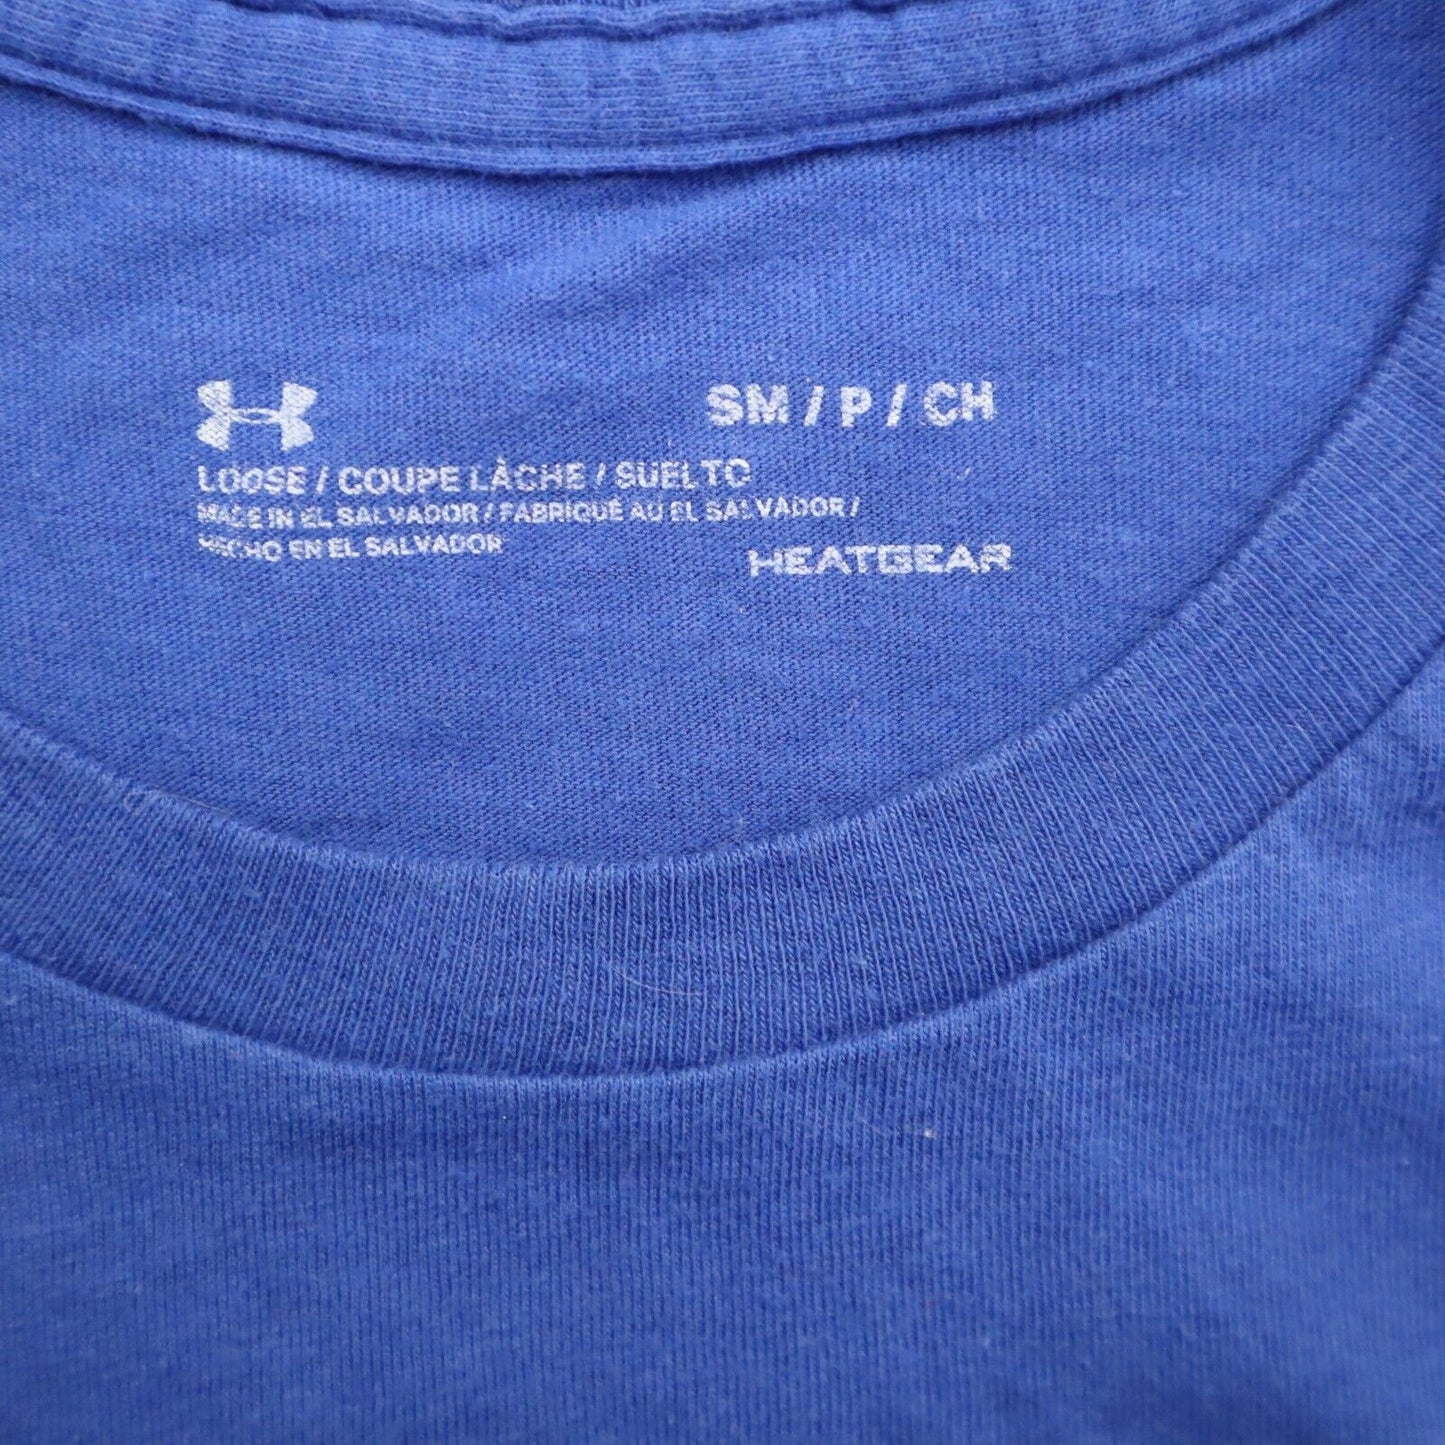 Under Armour Mens T-Shirt Crew Neck Graphic Tee Heatgear Short Sleeve Blue SM/P